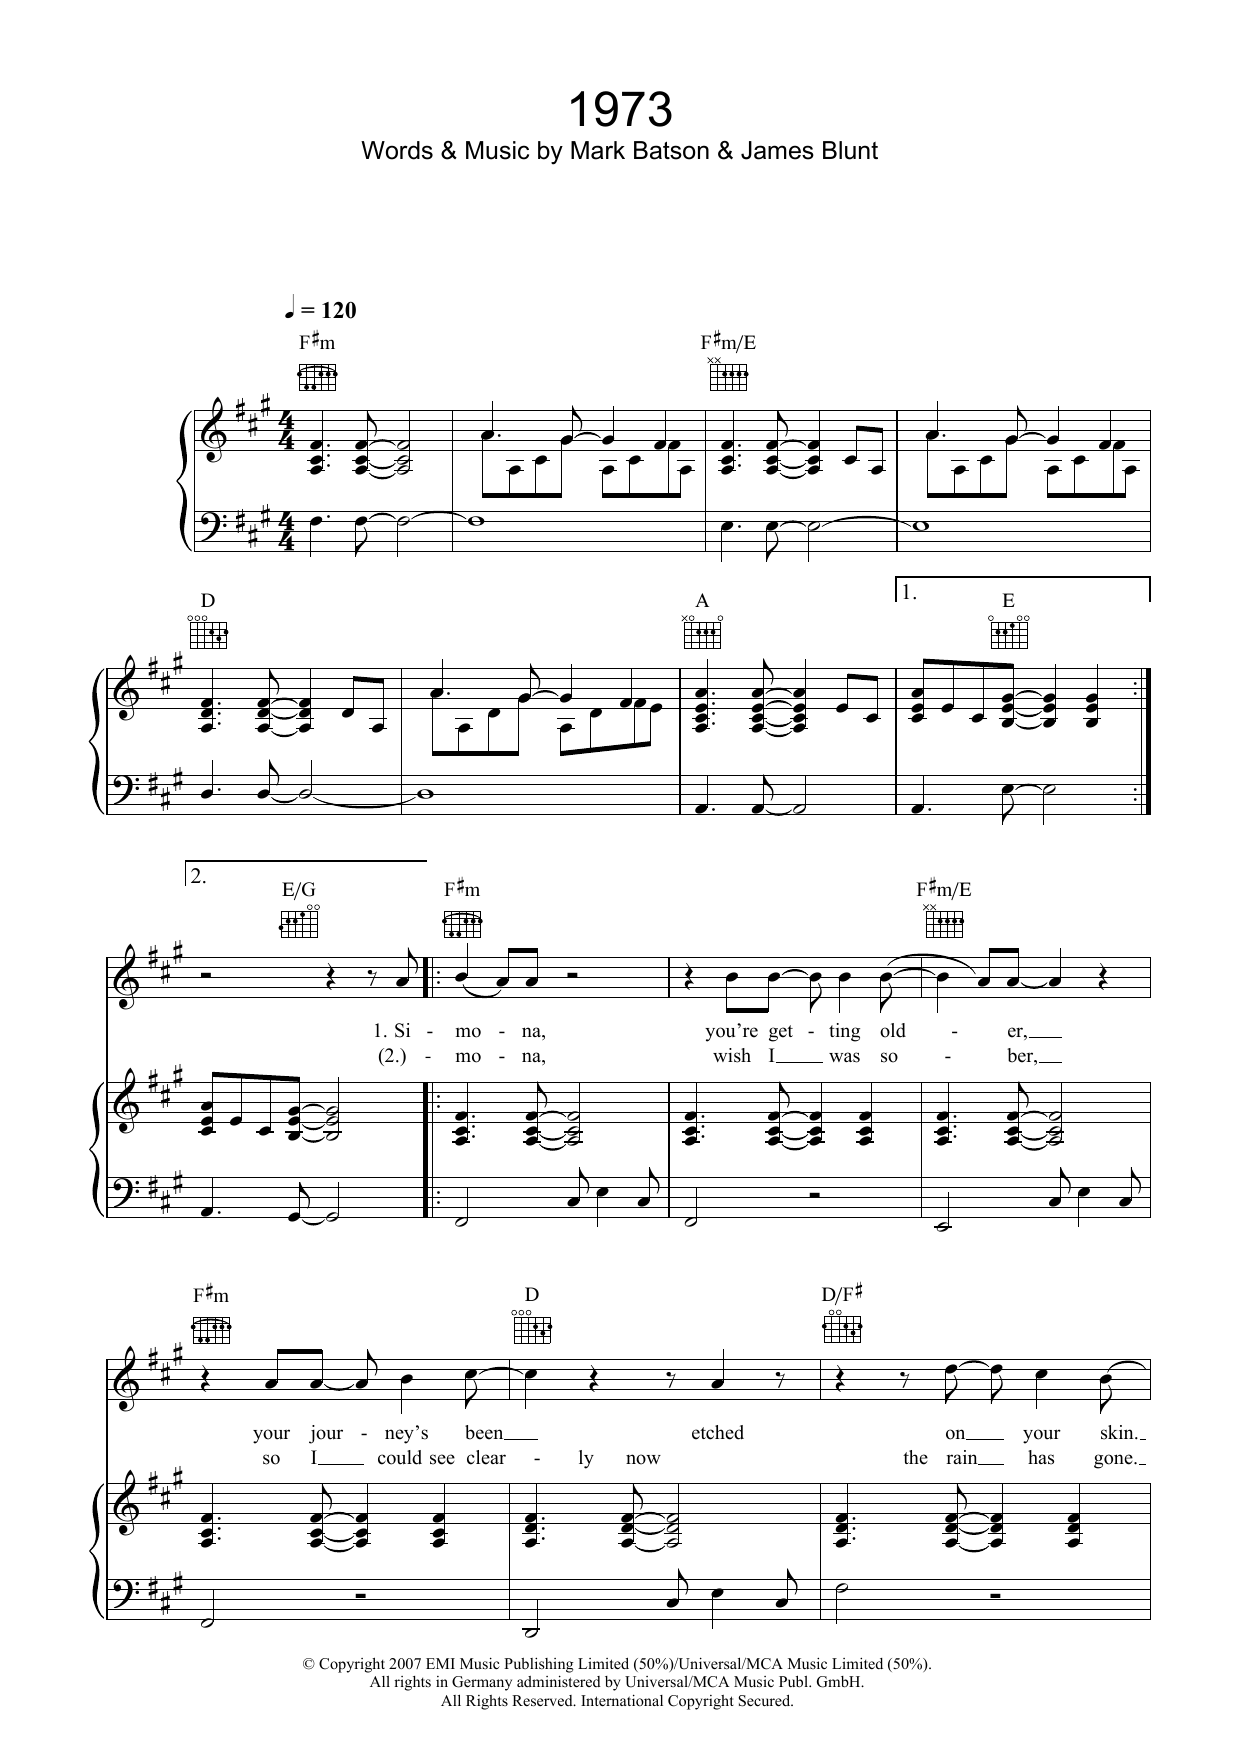 James Blunt 1973 Sheet Music Notes & Chords for Lyrics & Chords - Download or Print PDF